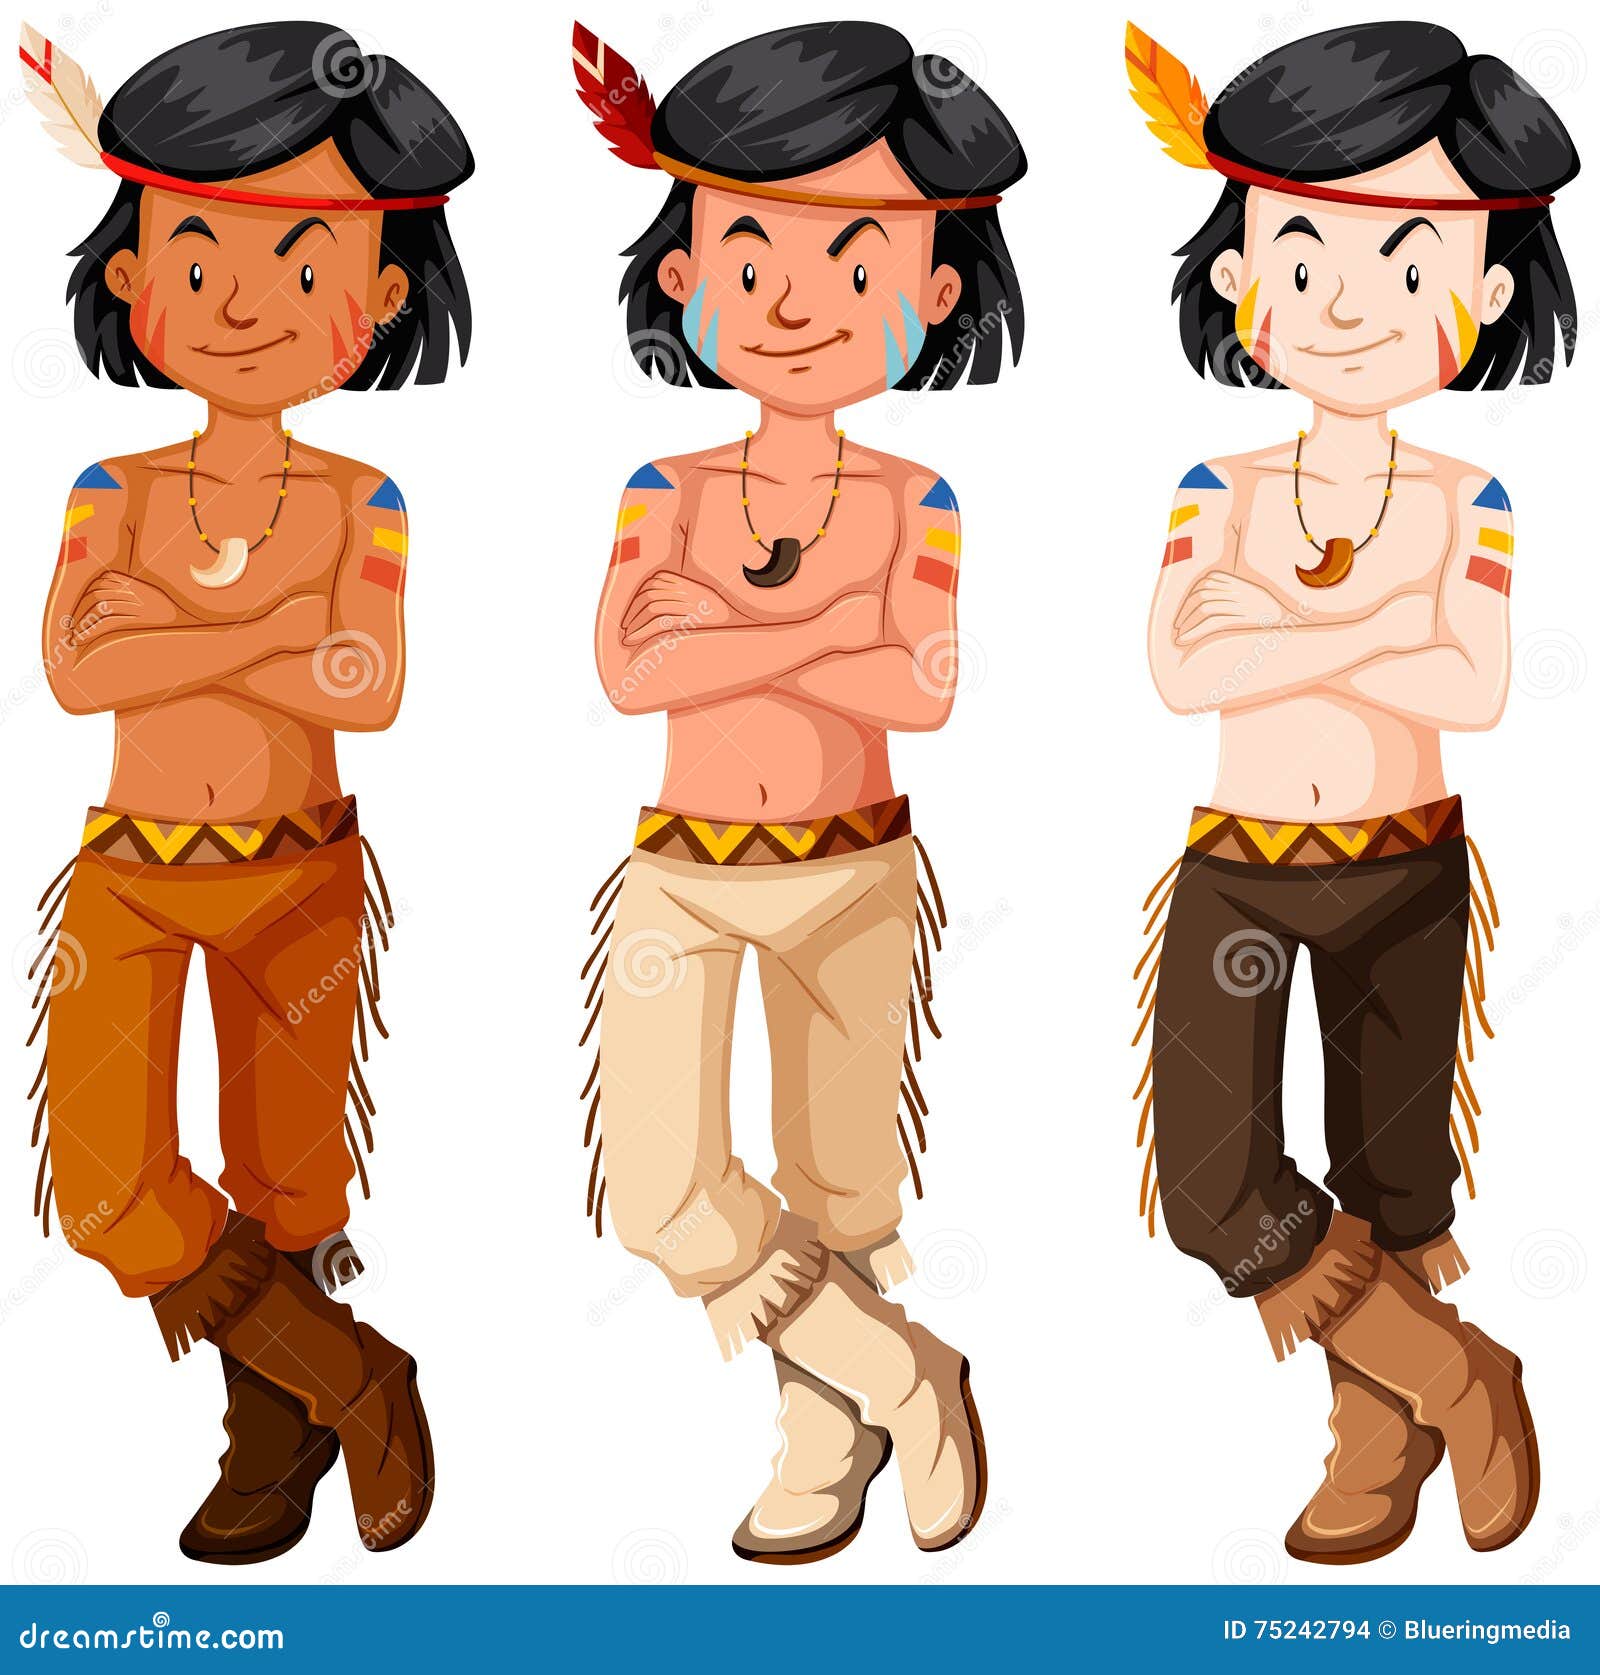 Cute american indian boys